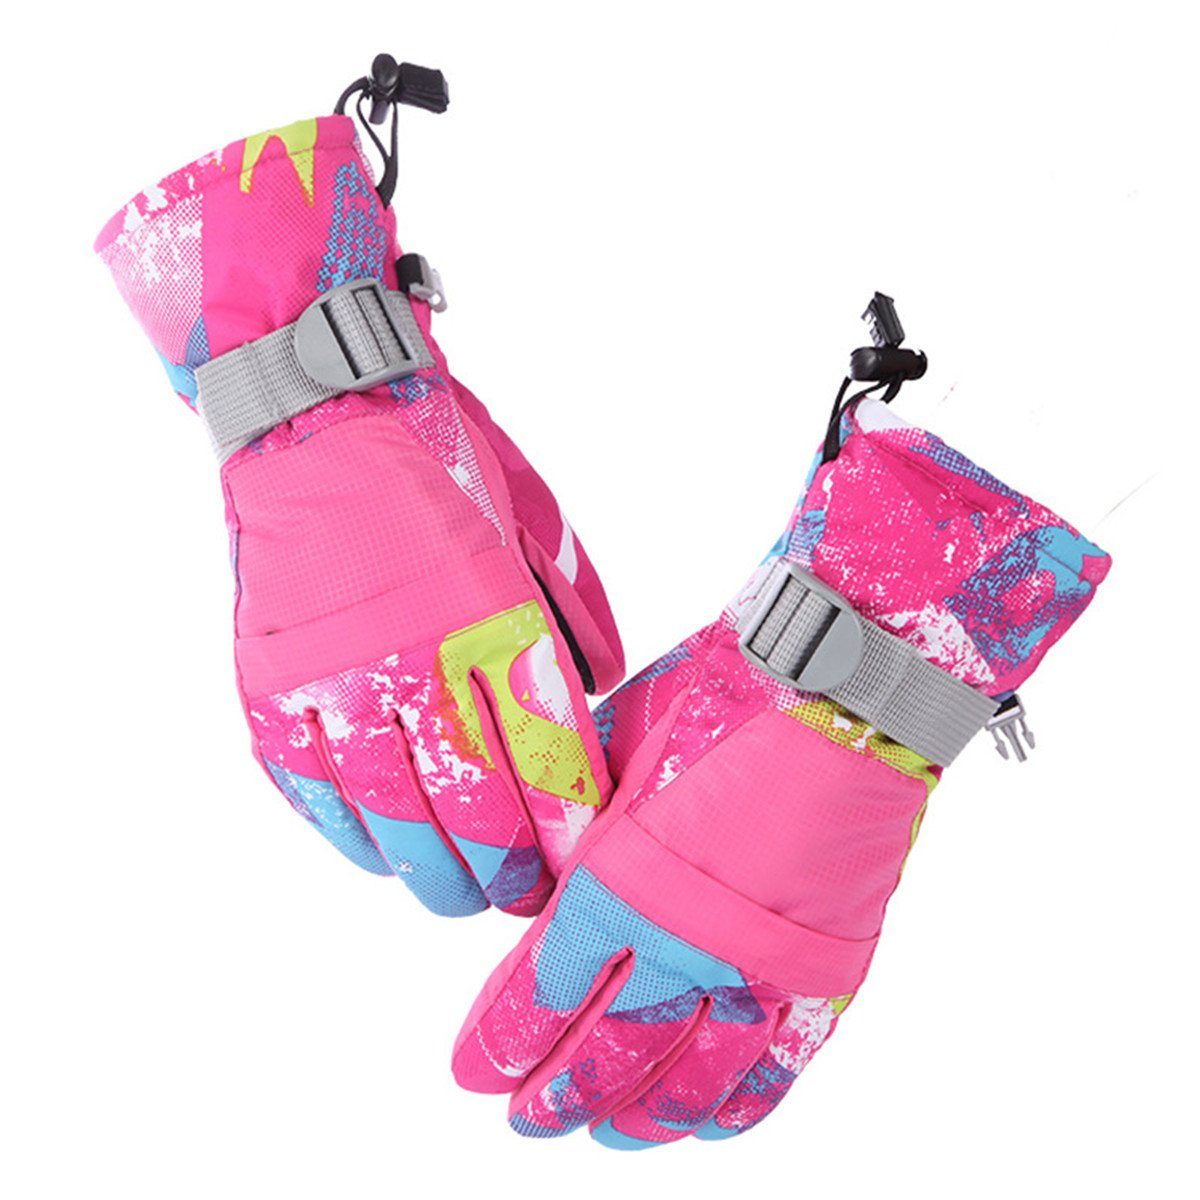 Die Sterne Langlaufhandschuhe Kinder/Männer/Damen Winter-Outdoor-Sport-Snowboard-Handschuhe rosarot